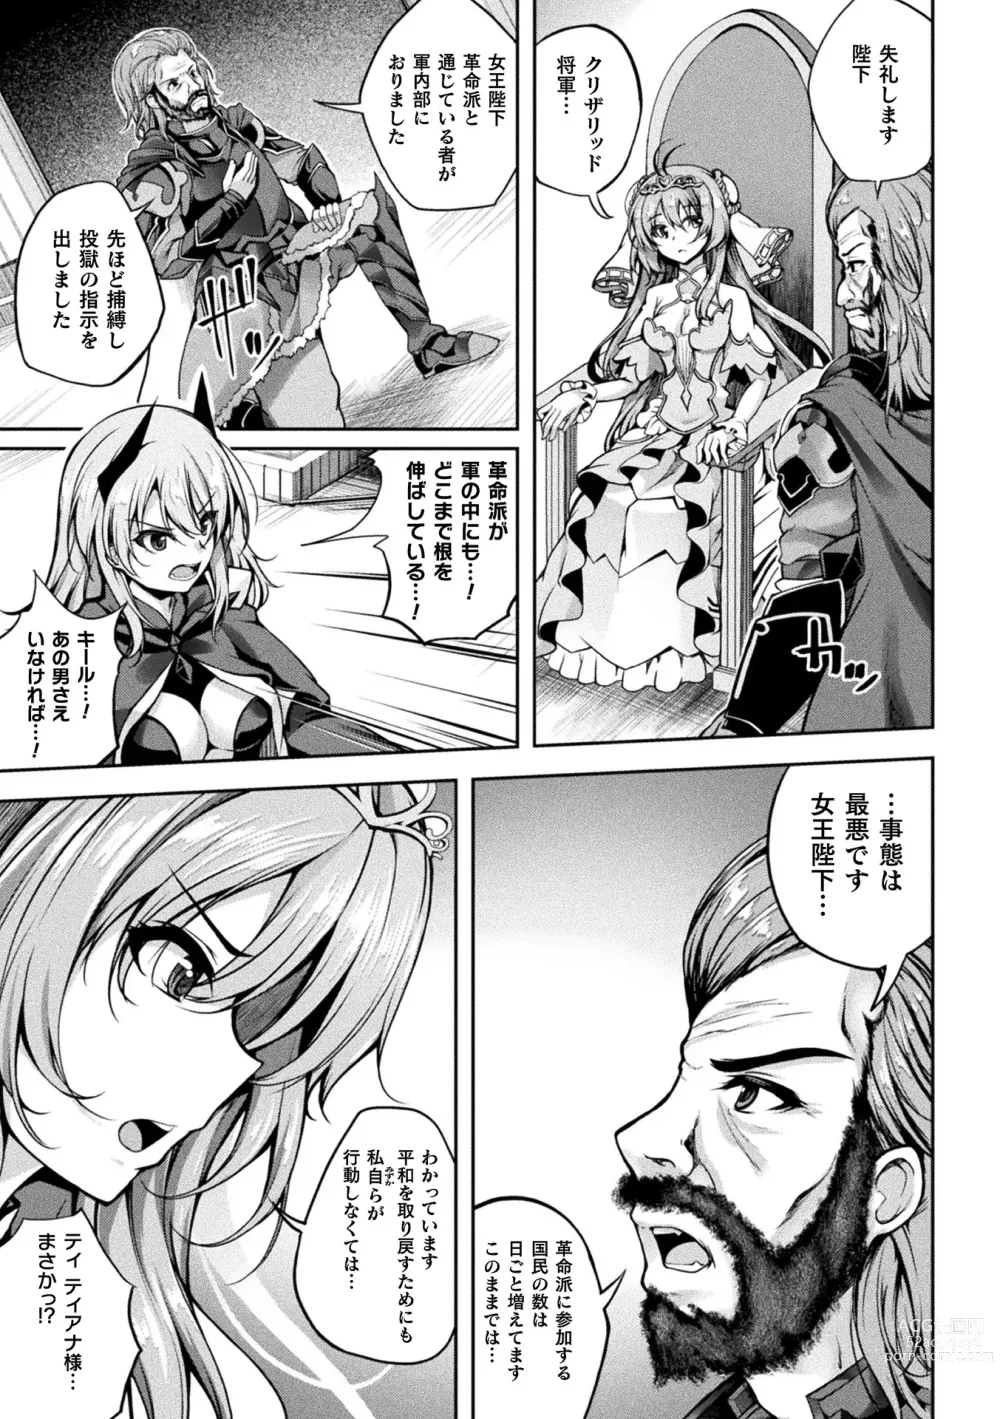 Page 7 of manga Kukkoro Heroines Vol. 33